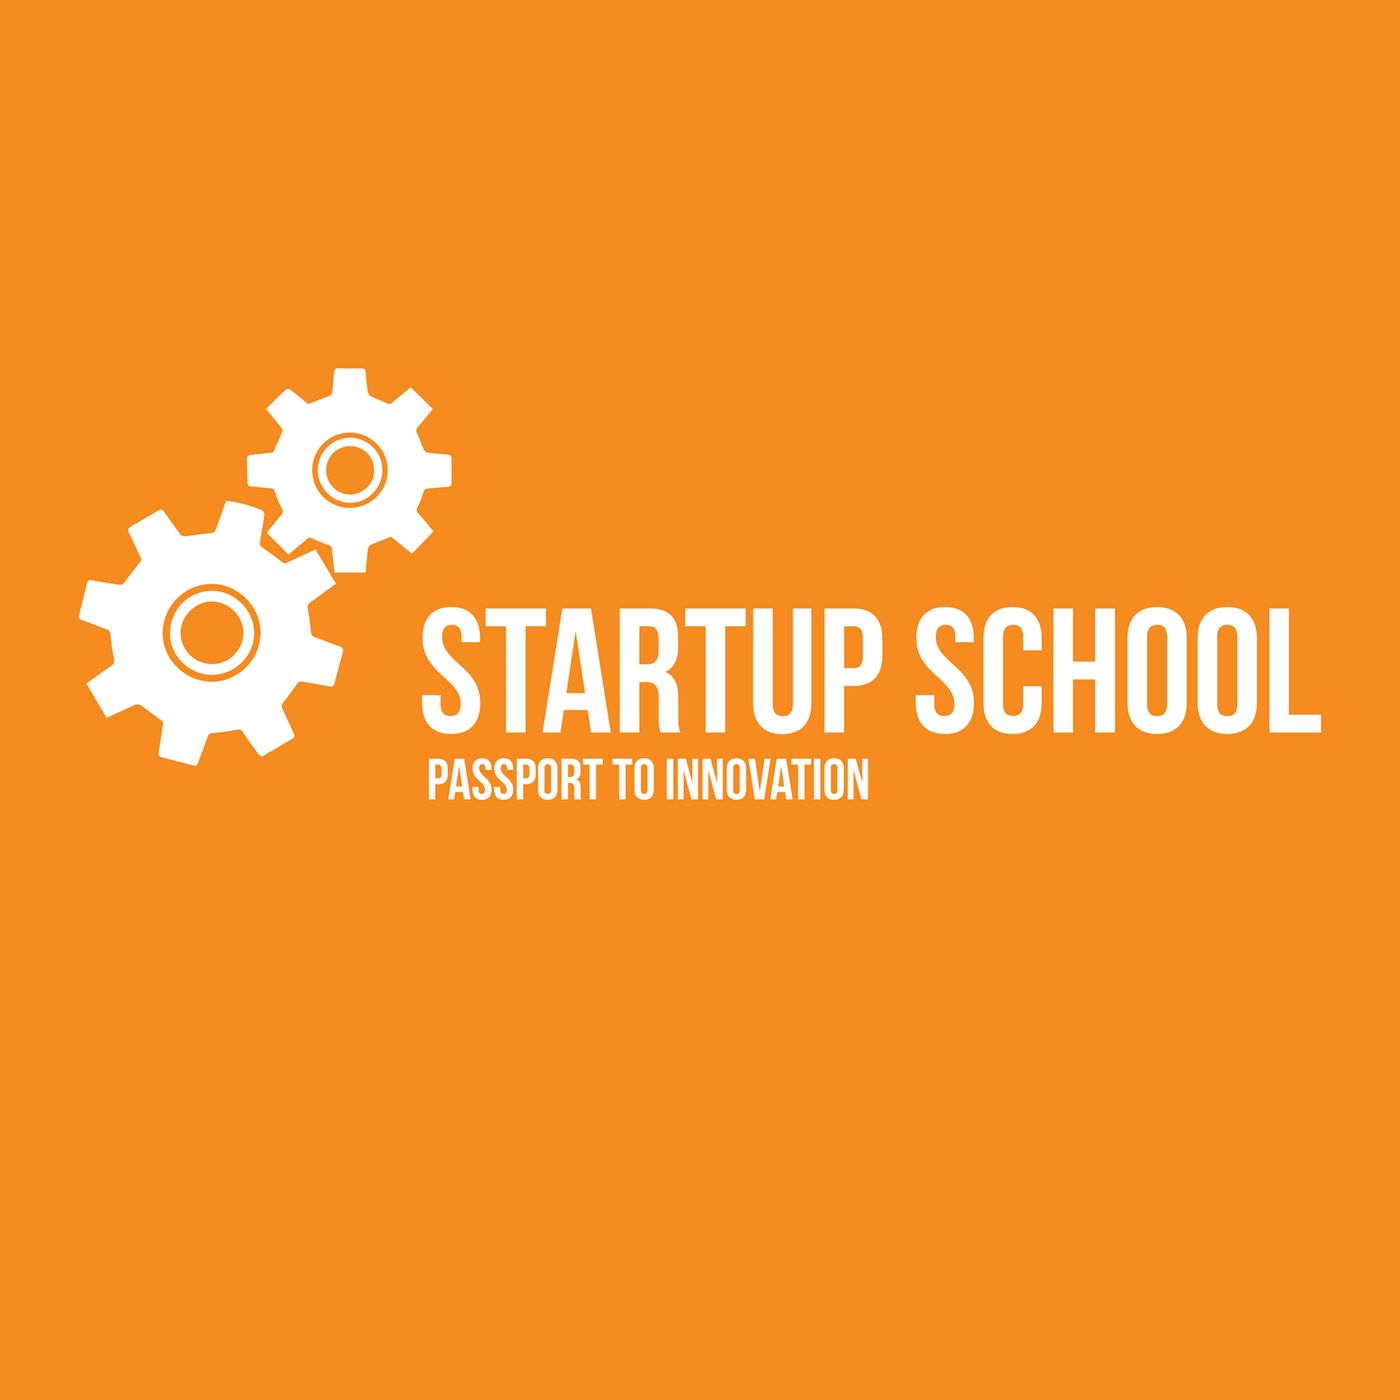 Start up school. Startup School. Старт ап скул. Startup School logo. Startup School надпись.